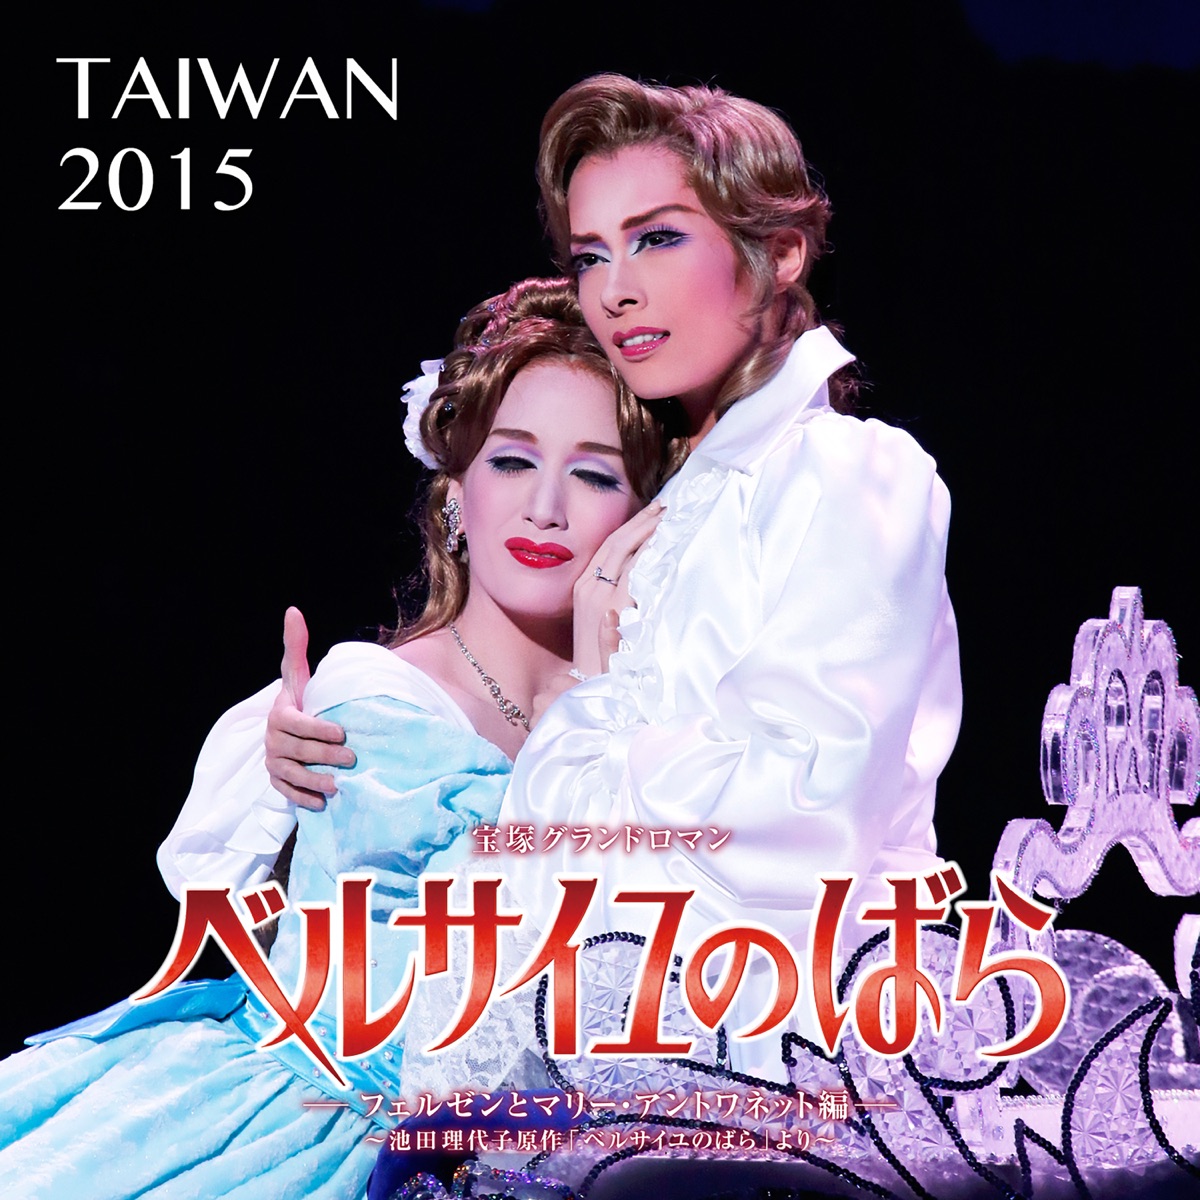 TAKARAZUKA IN TAIWAN 2015 STAGEu0026DOCUMENT - ミュージック